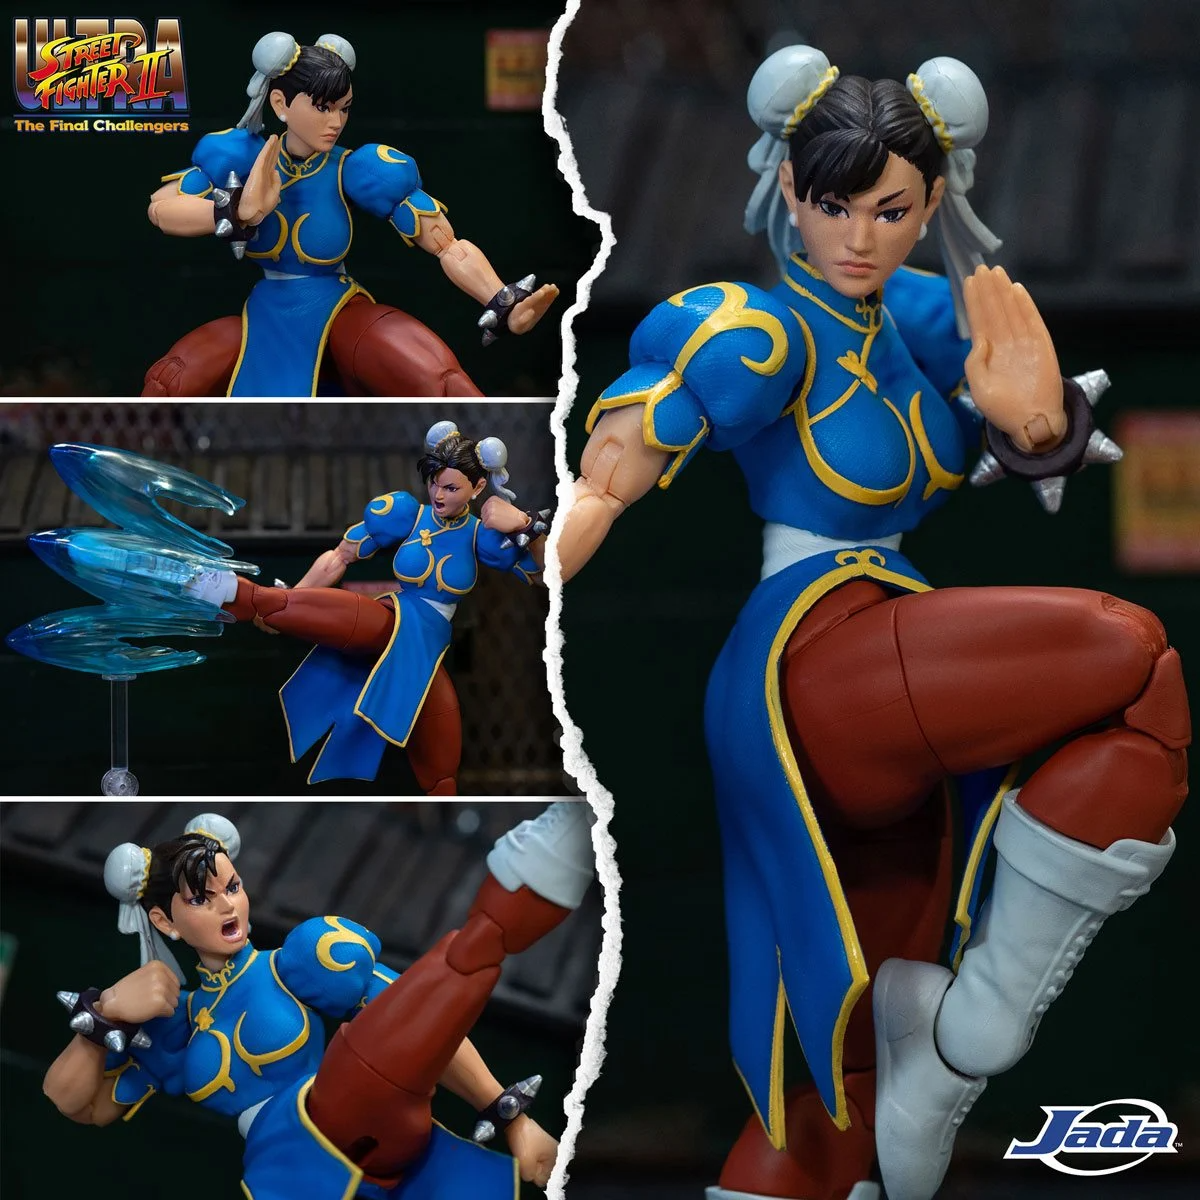 Ultra Street Fighter 2 Chun Li Jada Toy Figure Release Date Details Playstation Lifestyle 